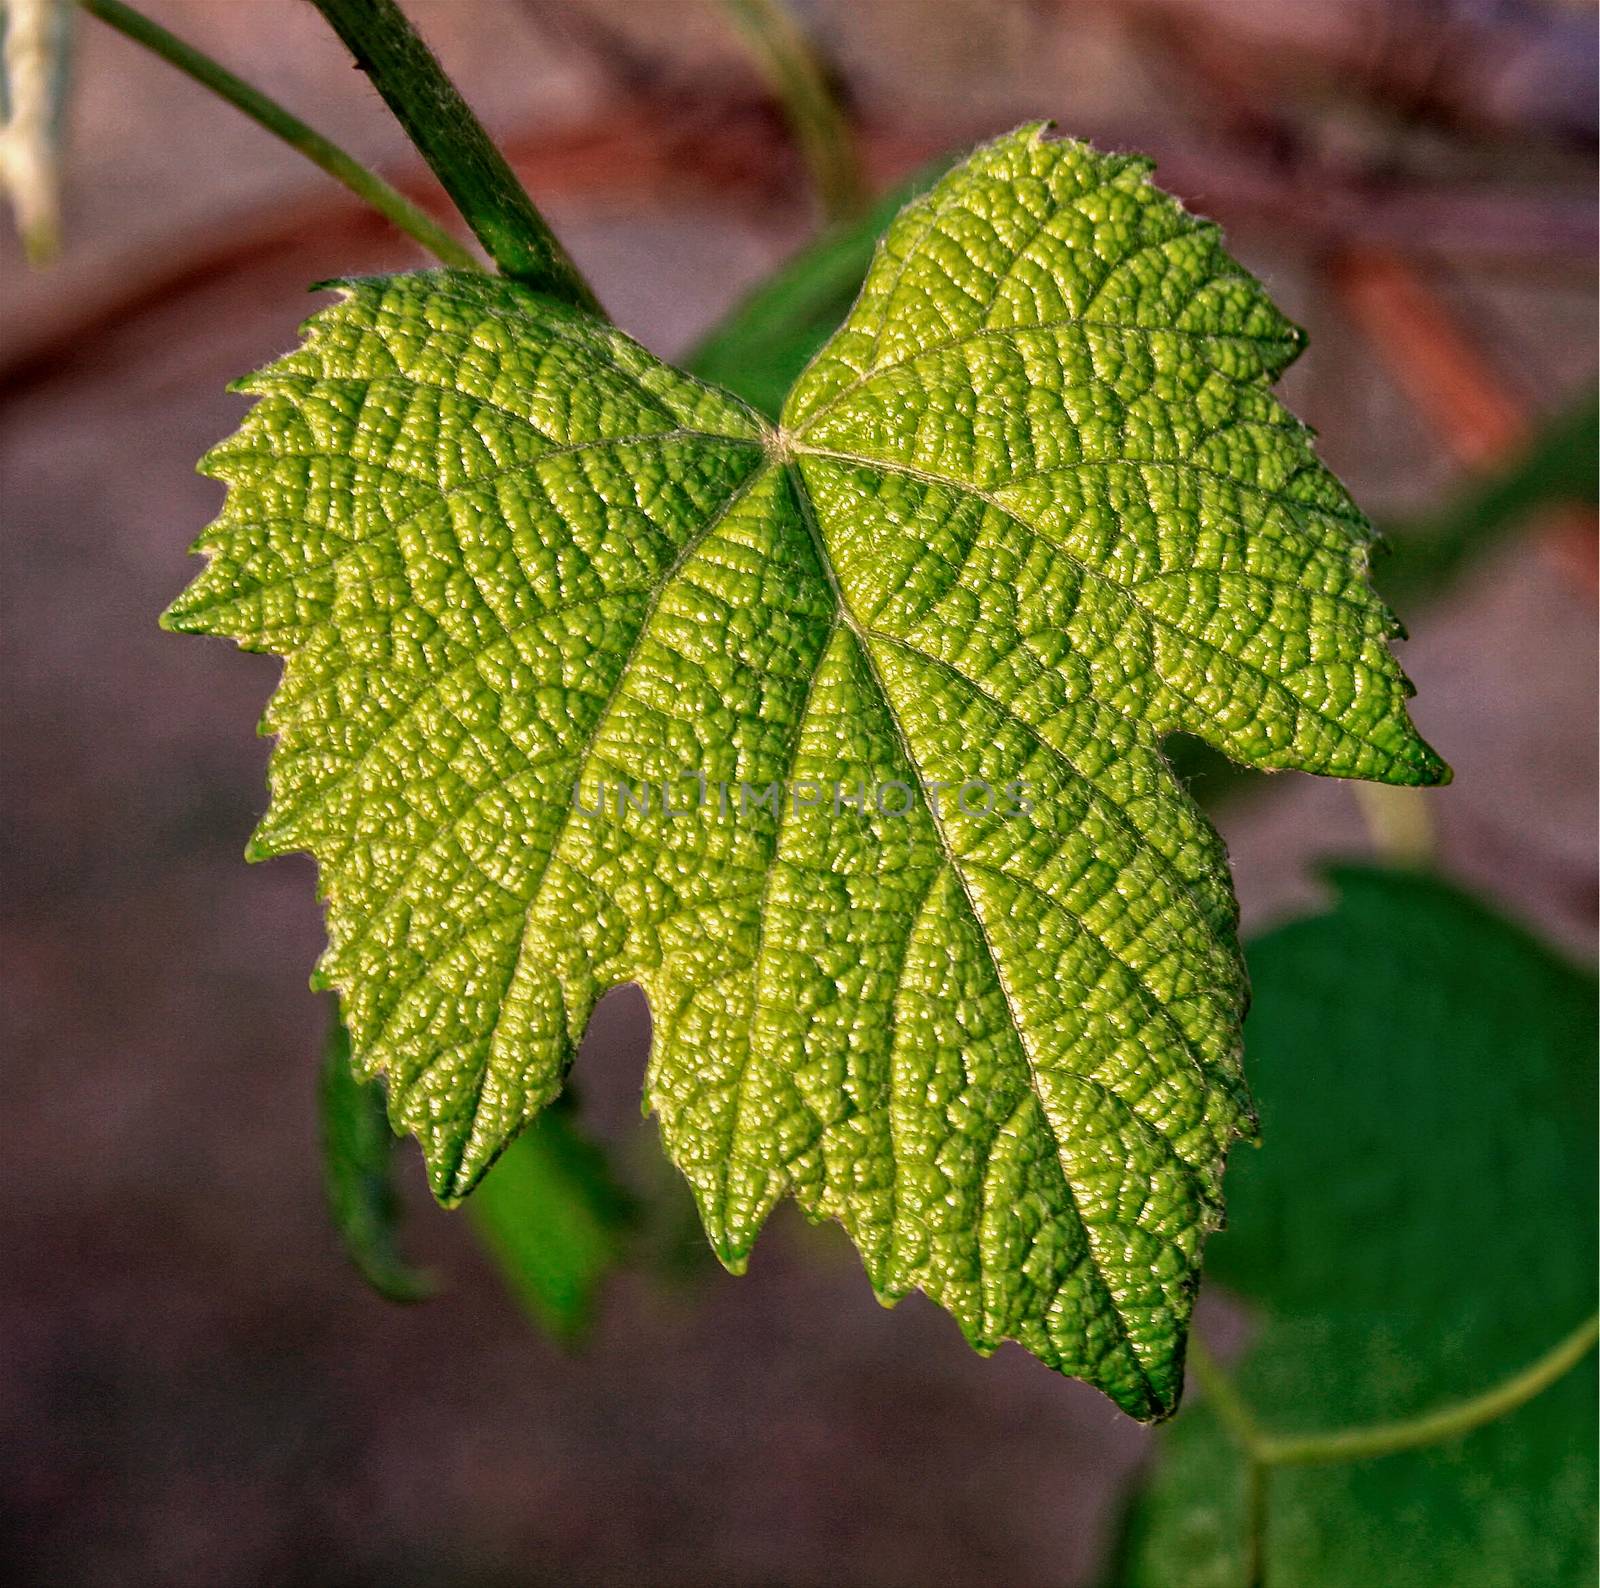 Detai of a vine leaf by JRTBurr